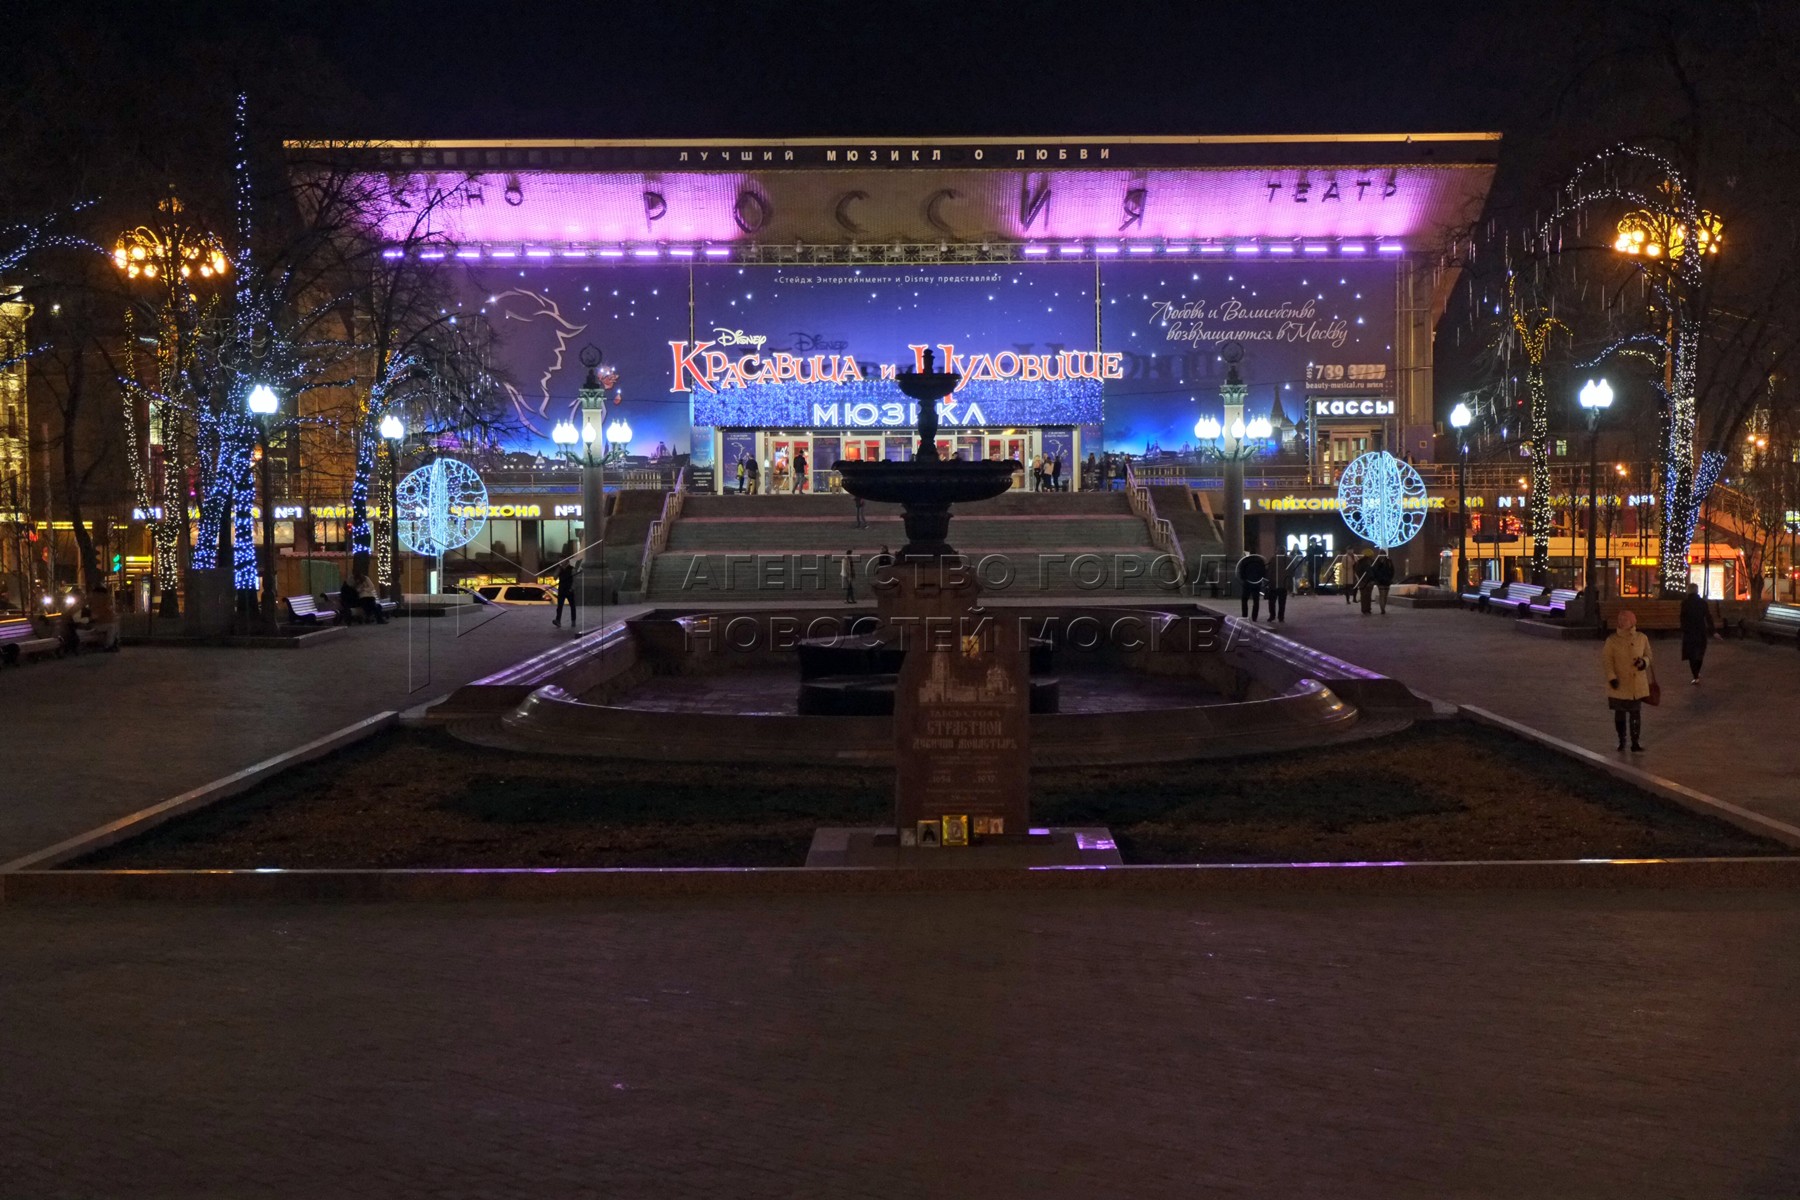 пушкинская площадь 2 театр мюзикла